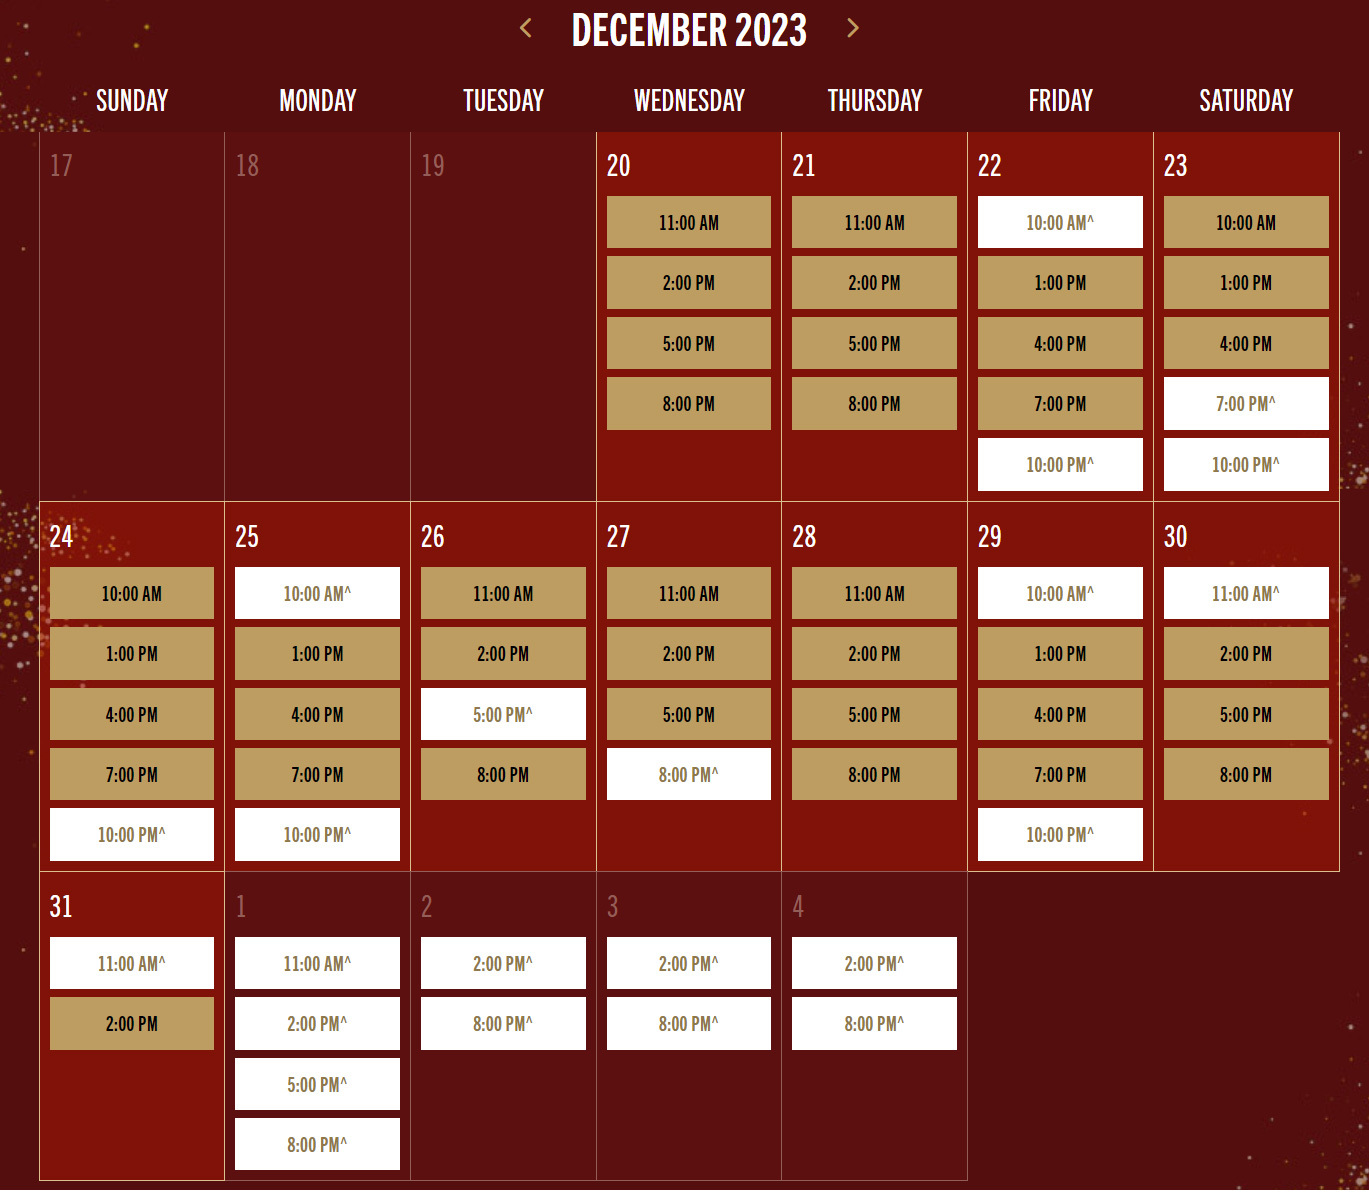 Radio City Christmas Spectacular Discount Ticket Calendar 2